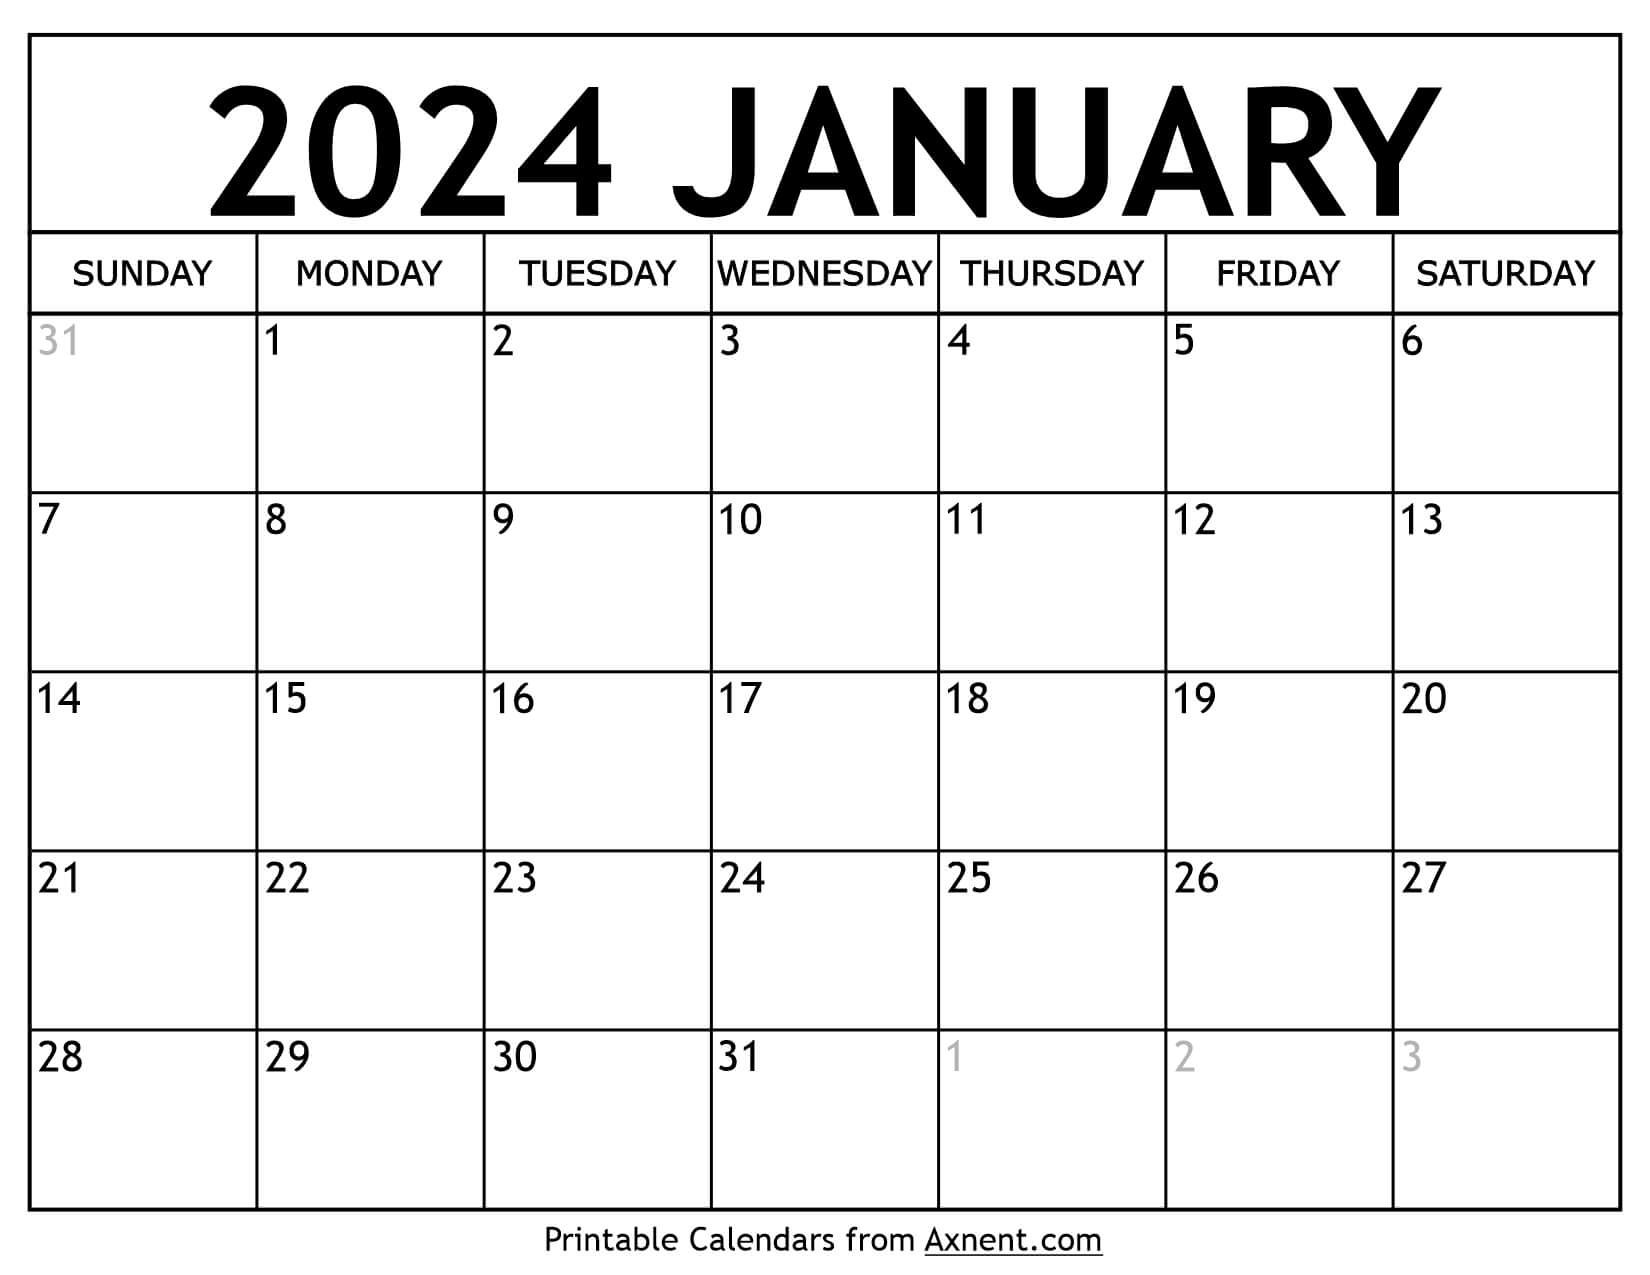 Printable January 2024 Calendar Template - Print Now for Calendar 2024 January Printable Free